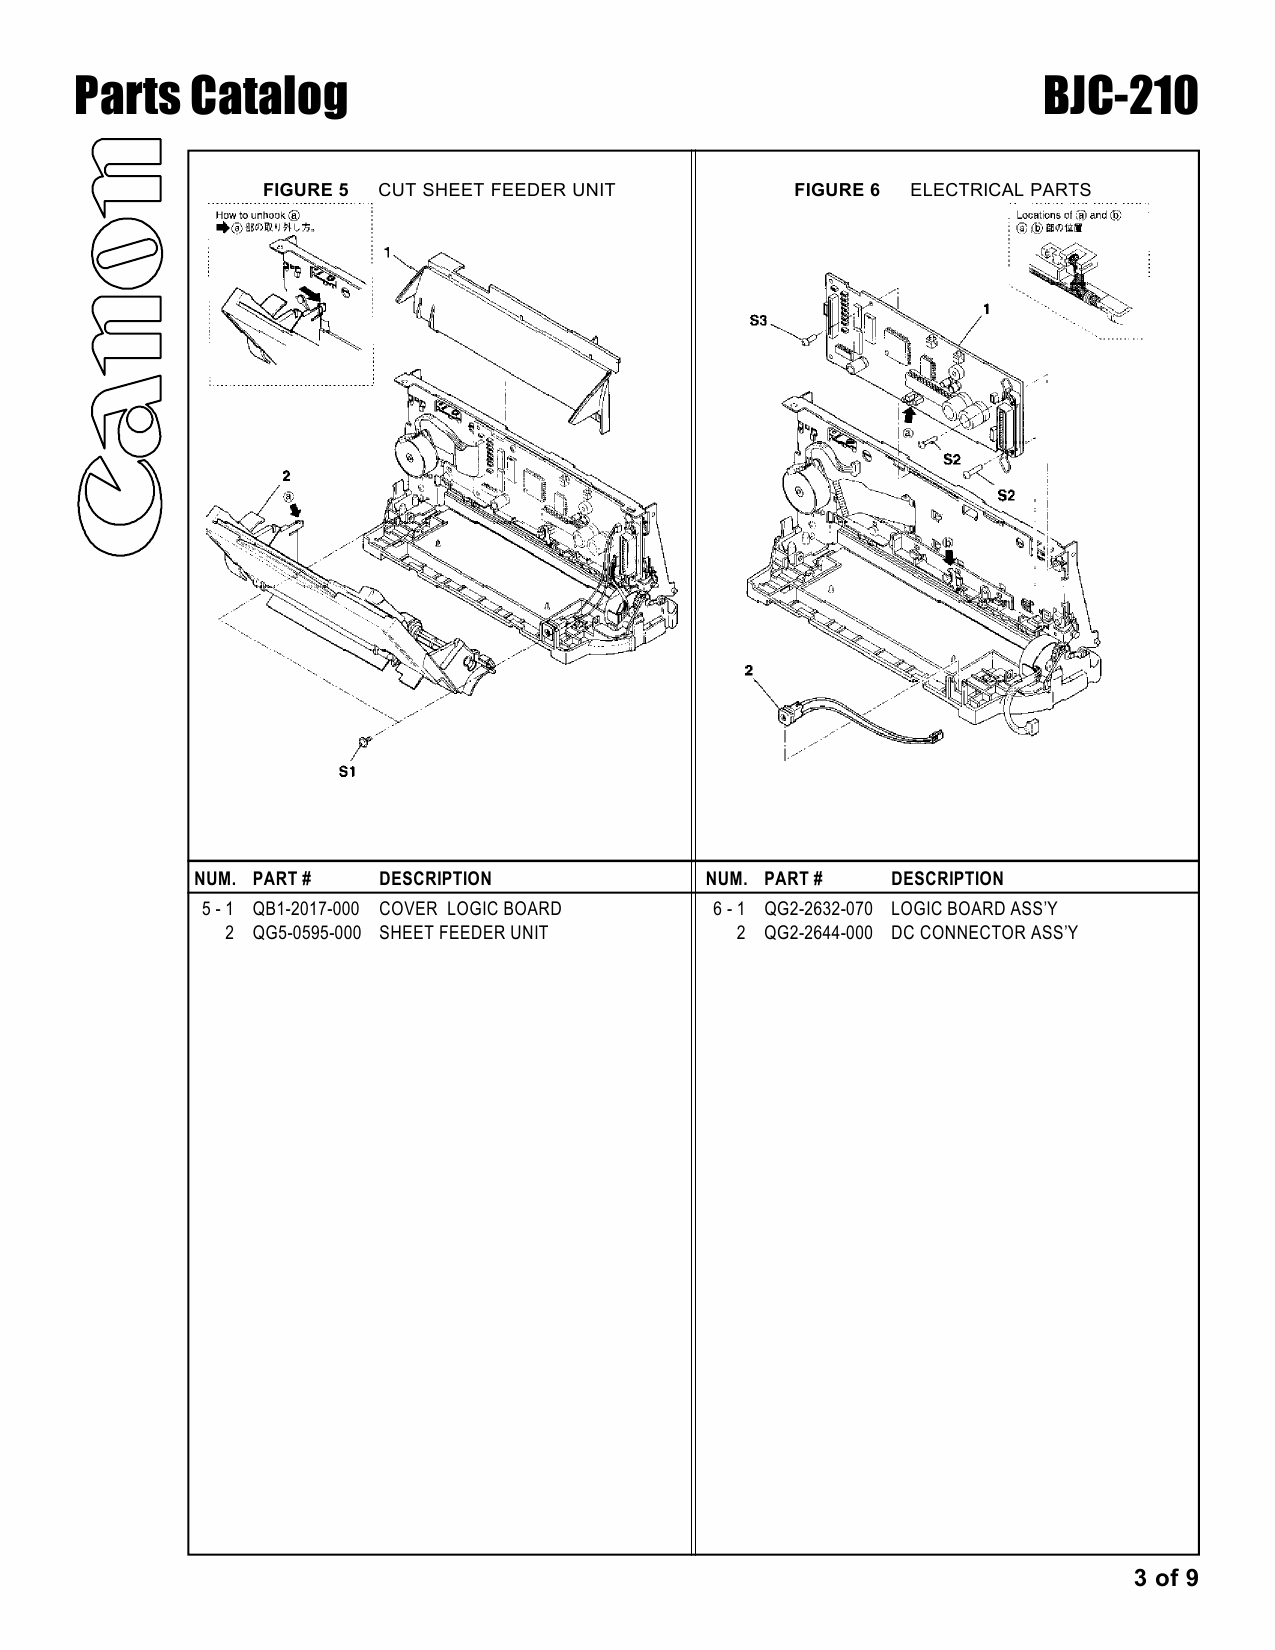 Canon BubbleJet BJC-210 Parts Catalog Manual-3